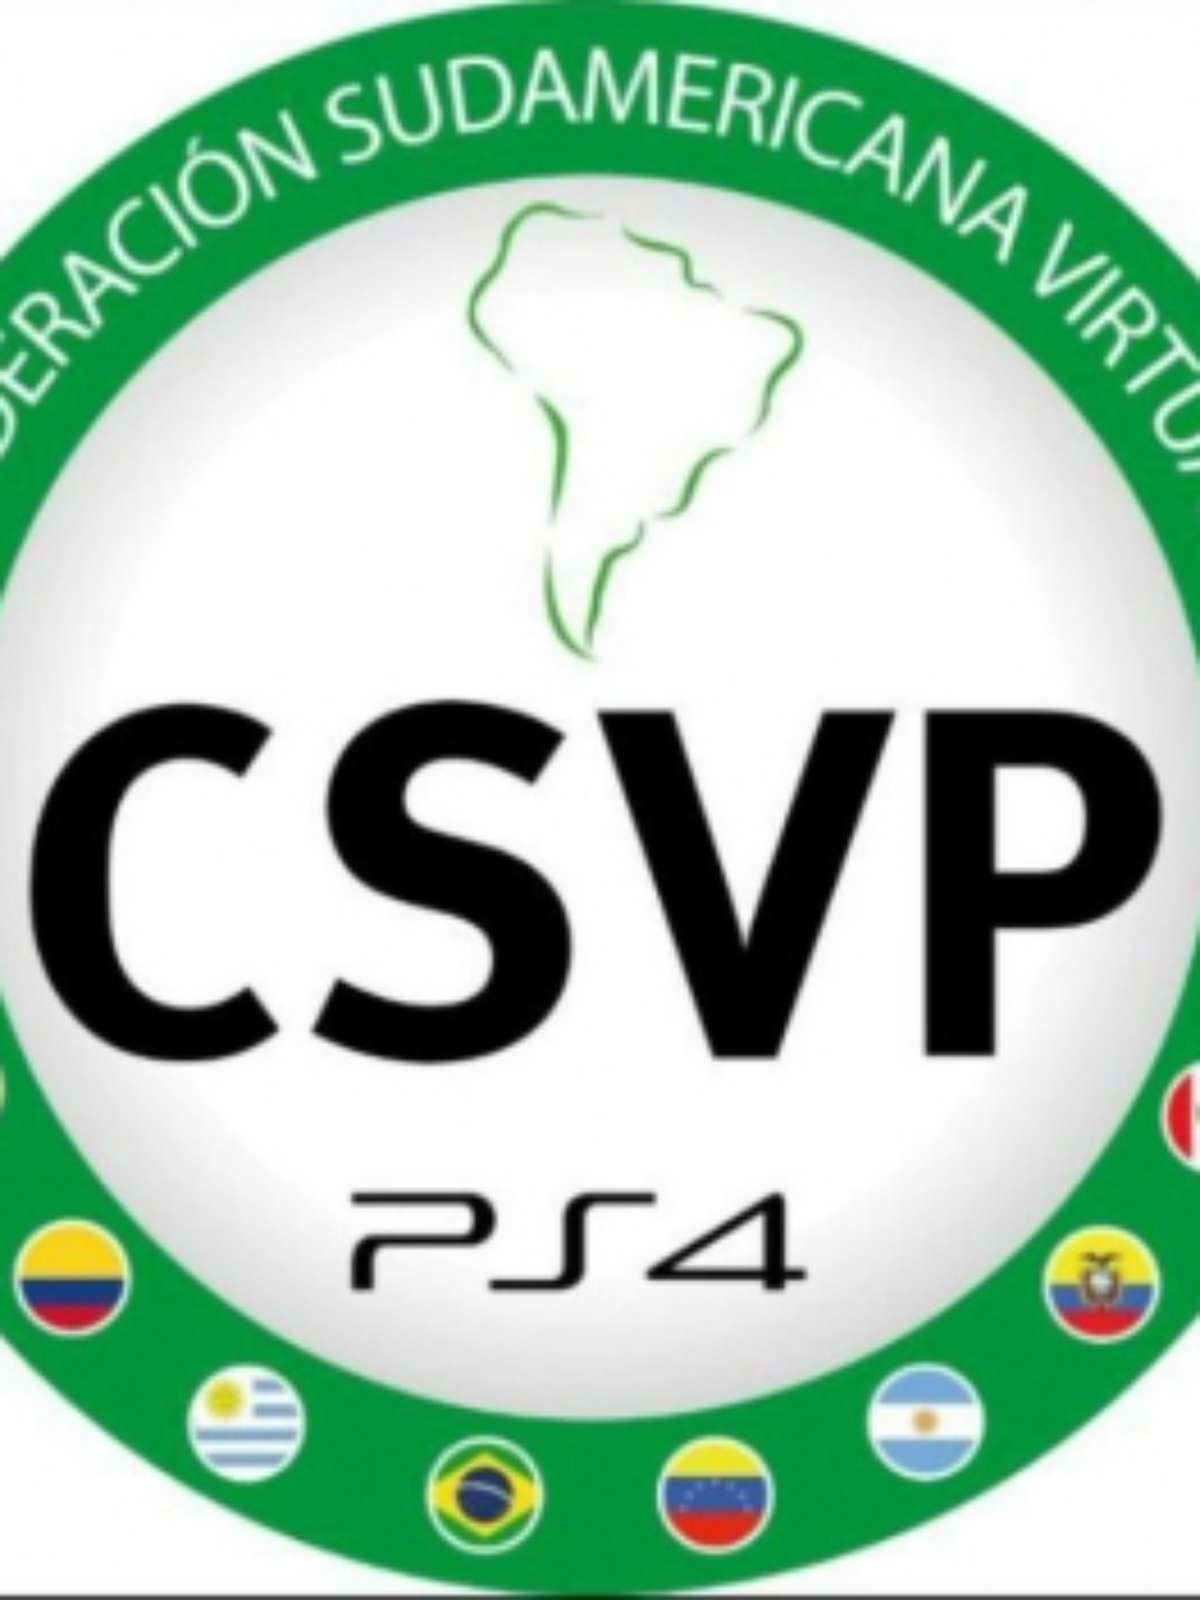 CSVP Brasil